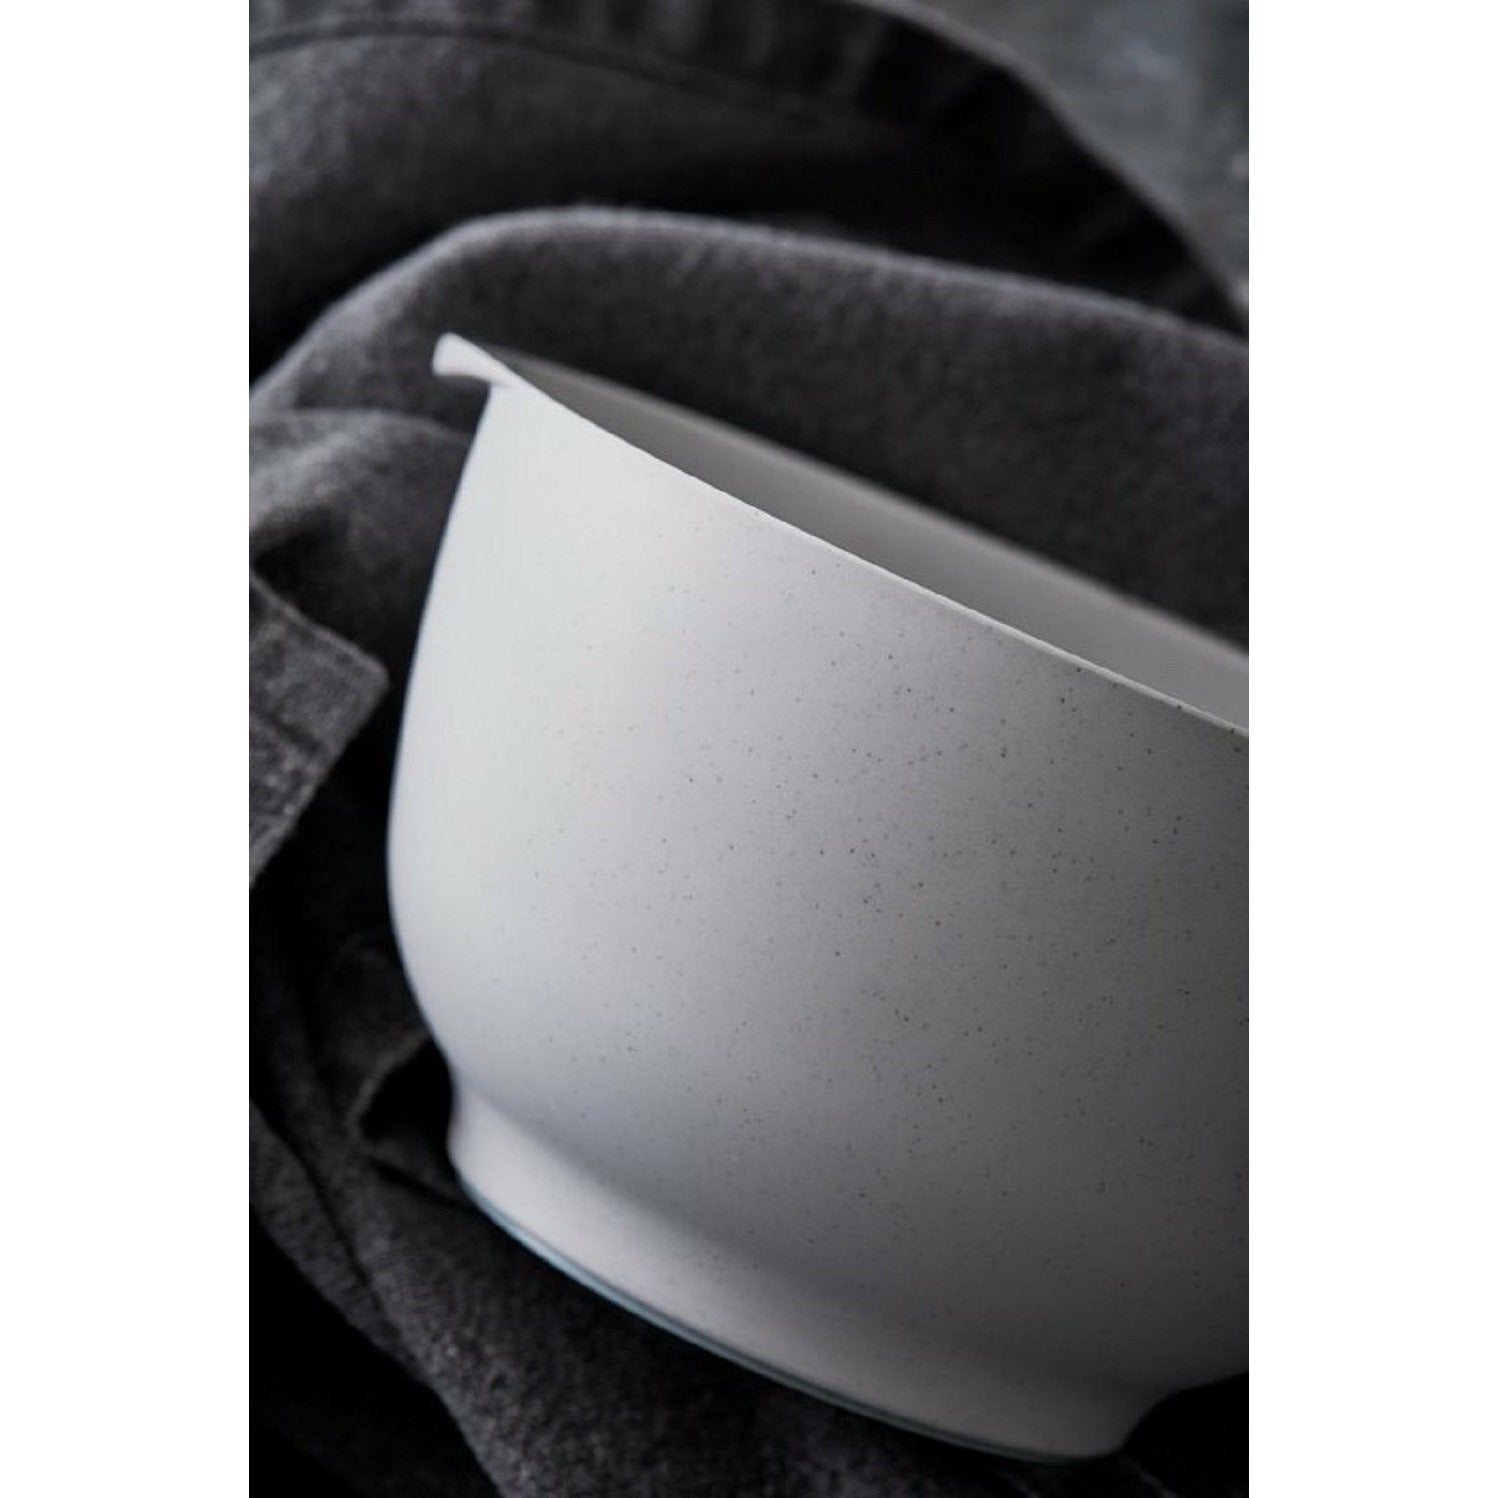 Rosti Margrethe Mixing Bowl Pebble White, 0,5 Liter